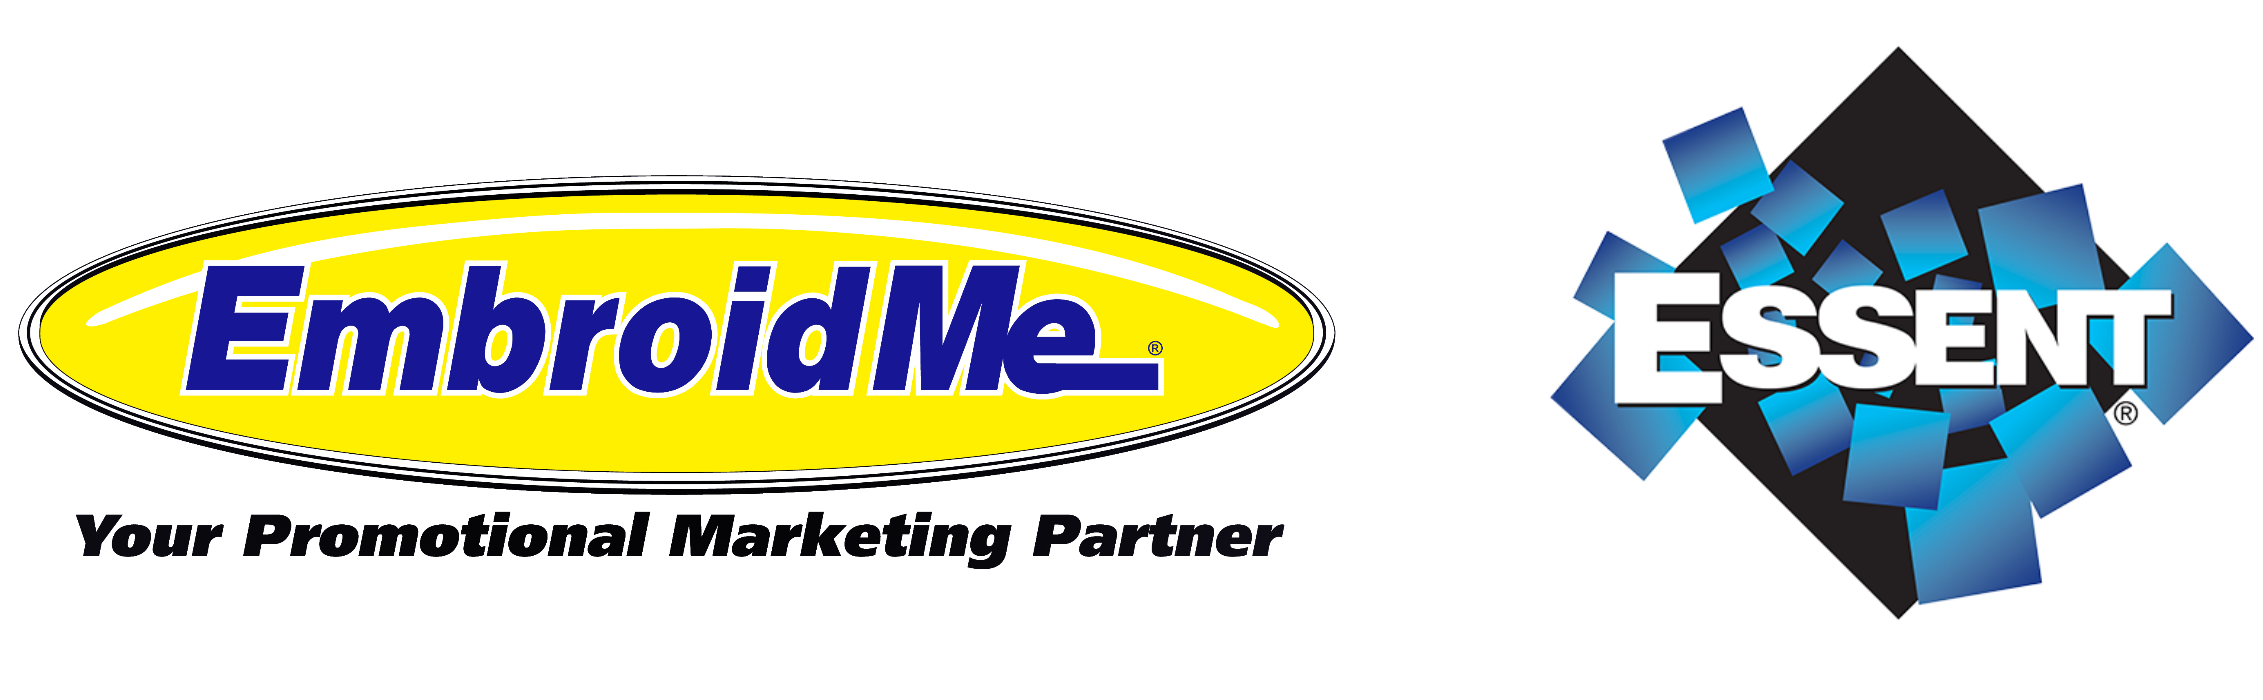 EmbroidMe Essent Supplier Integration Initiative